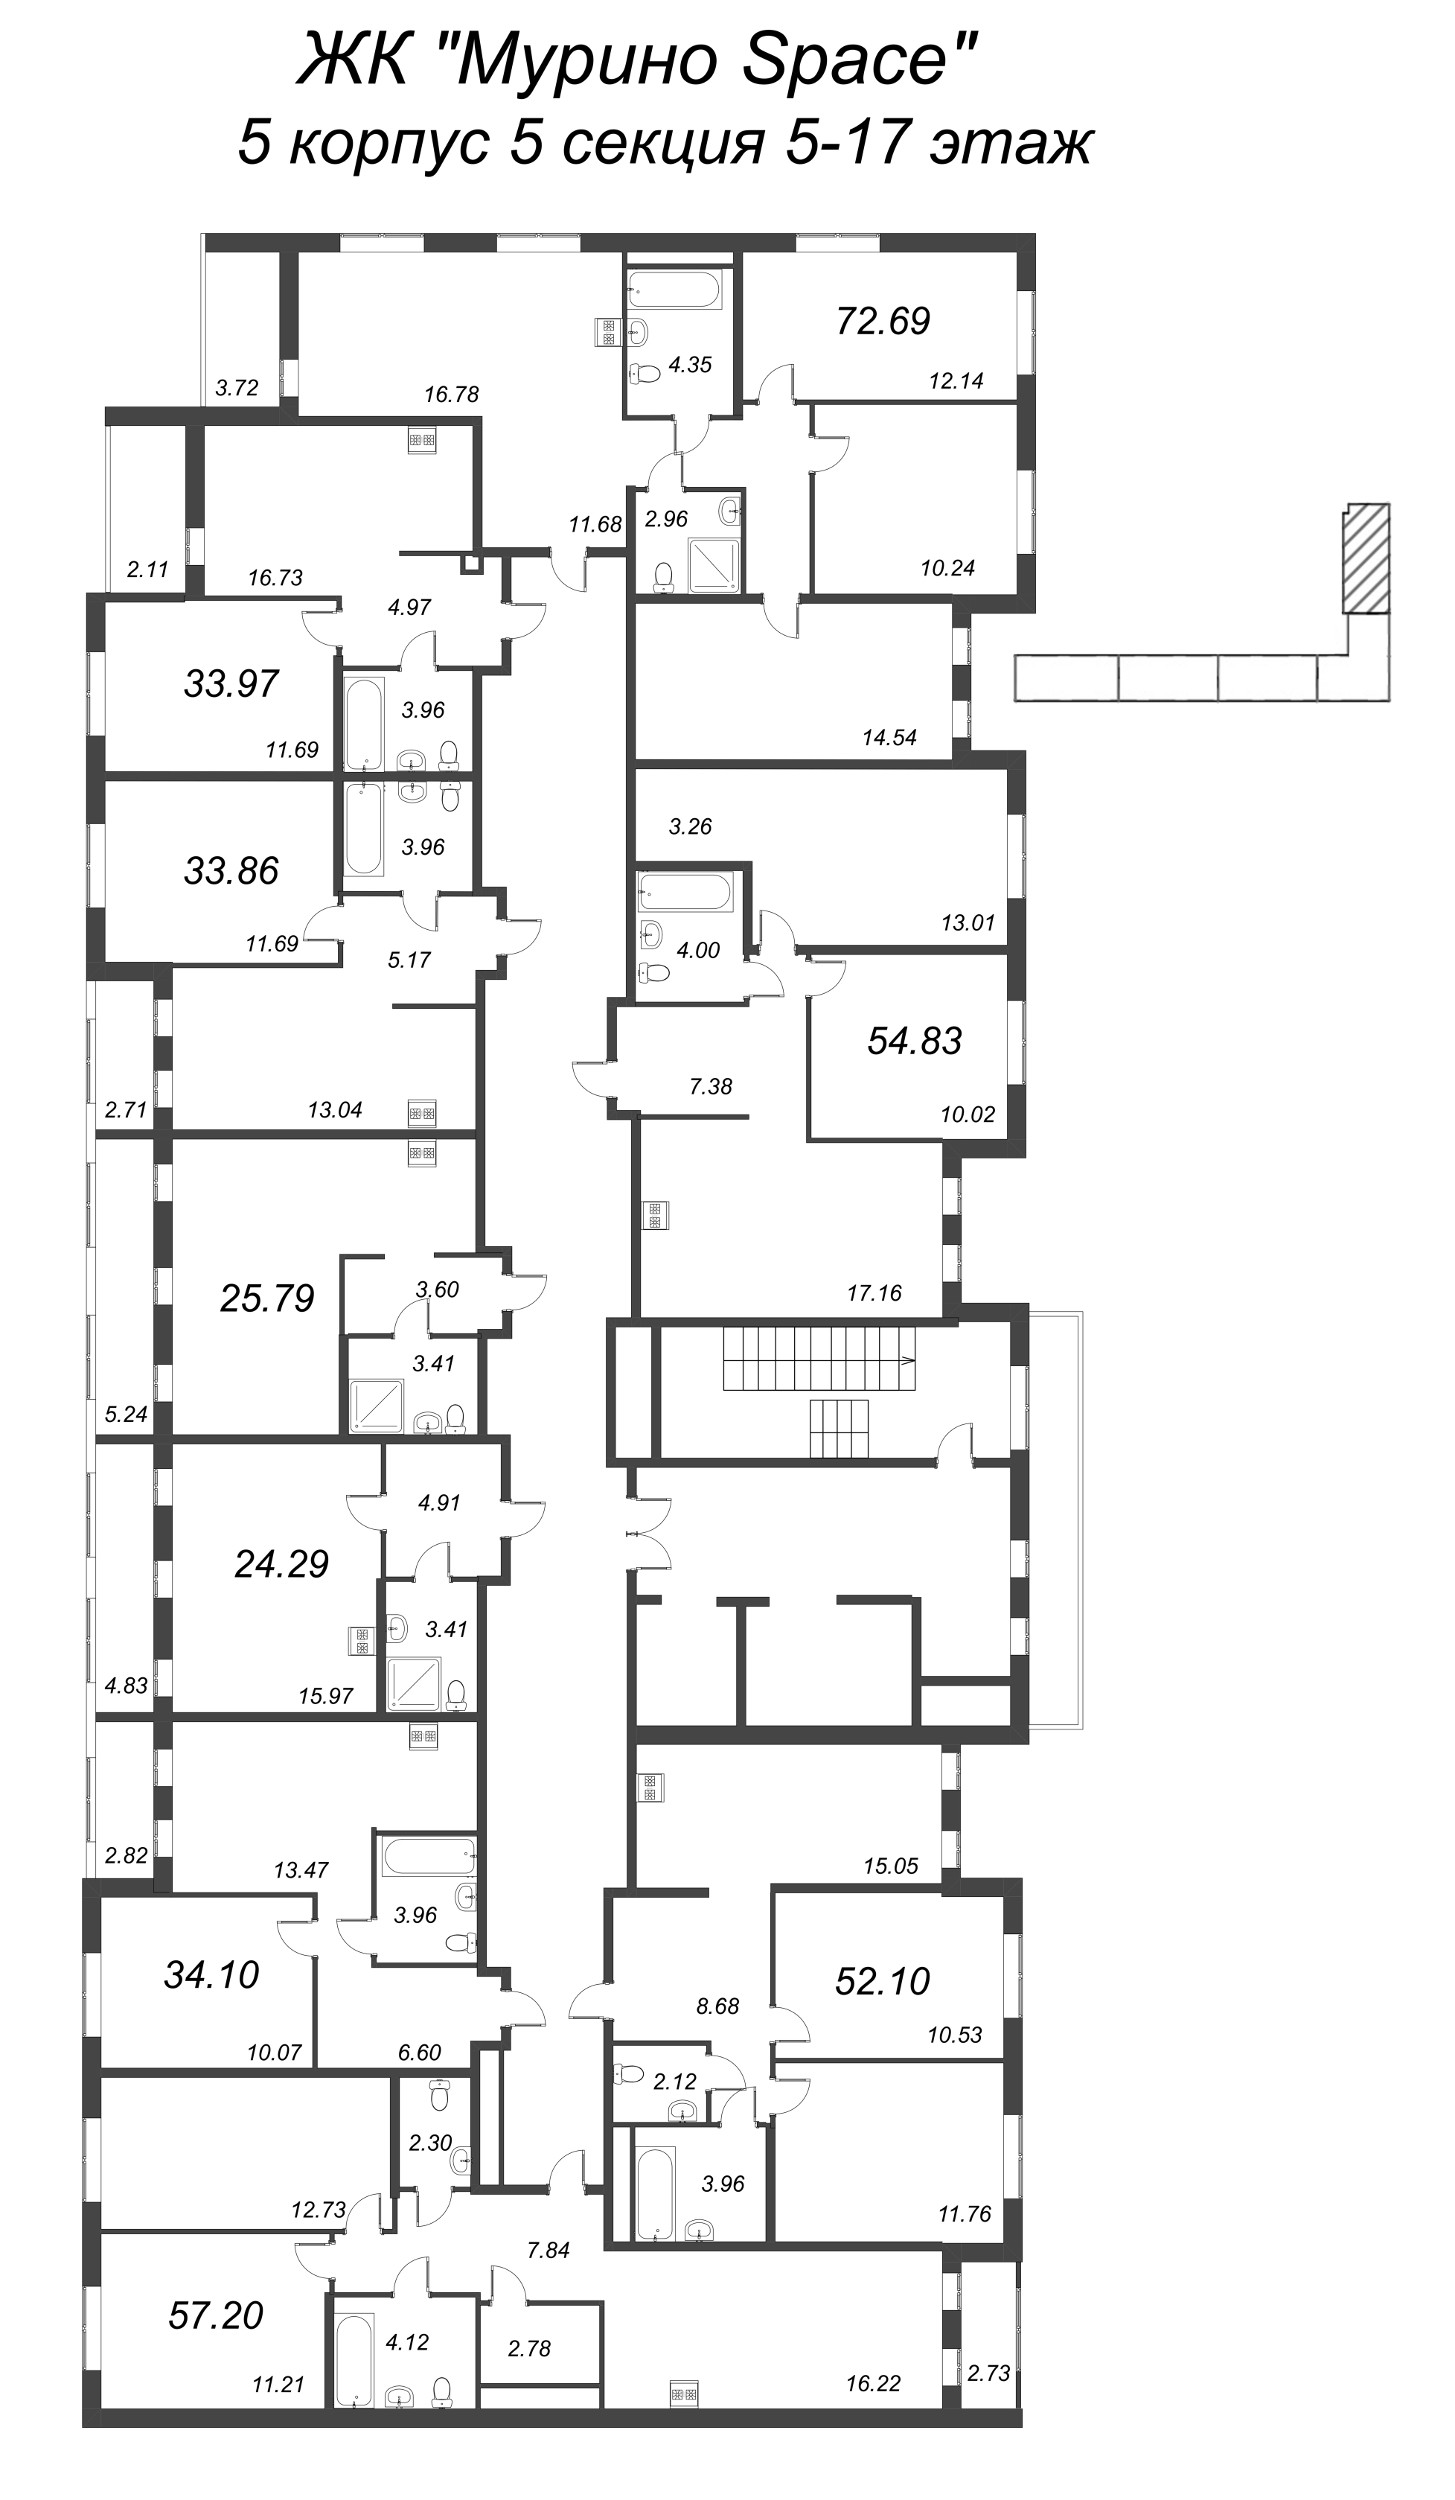 3-комнатная (Евро) квартира, 54.83 м² - планировка этажа